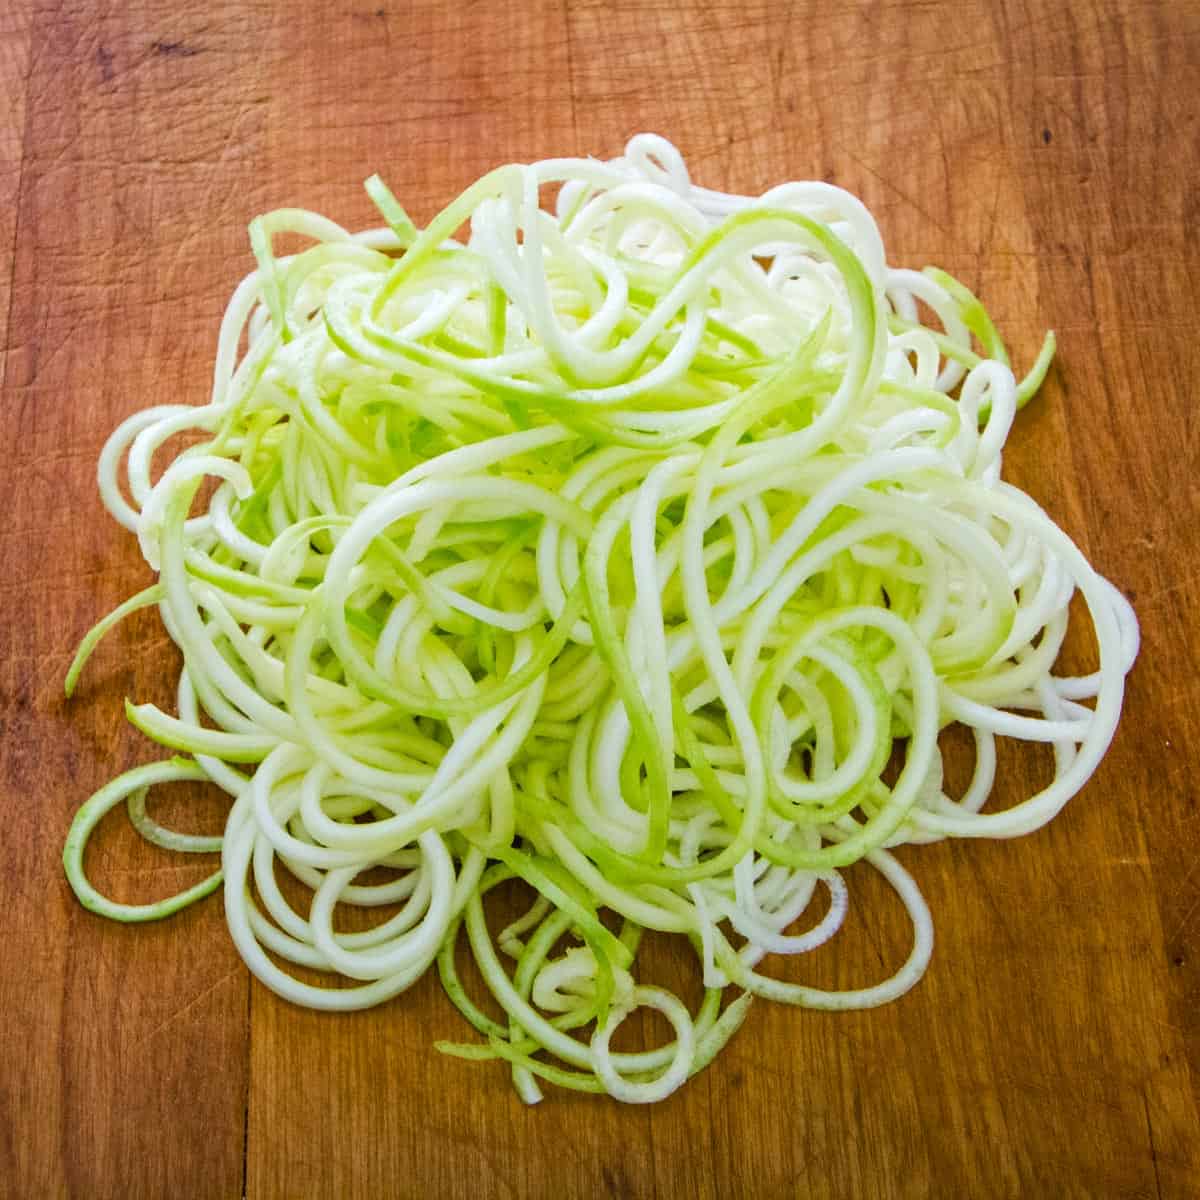 https://cookeatpaleo.com/wp-content/uploads/2012/12/zucchini-noodles-cook-eat-well.jpg